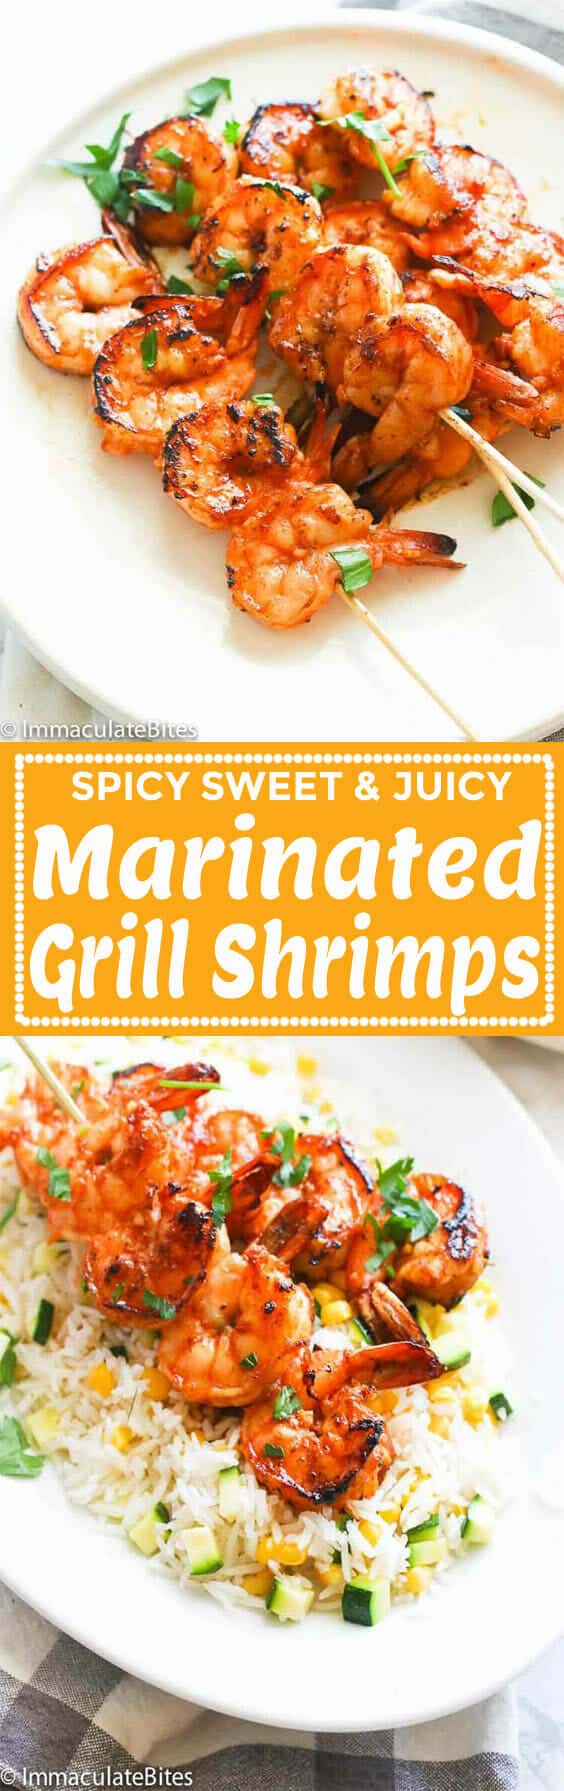 Marinated Grill Shrimp